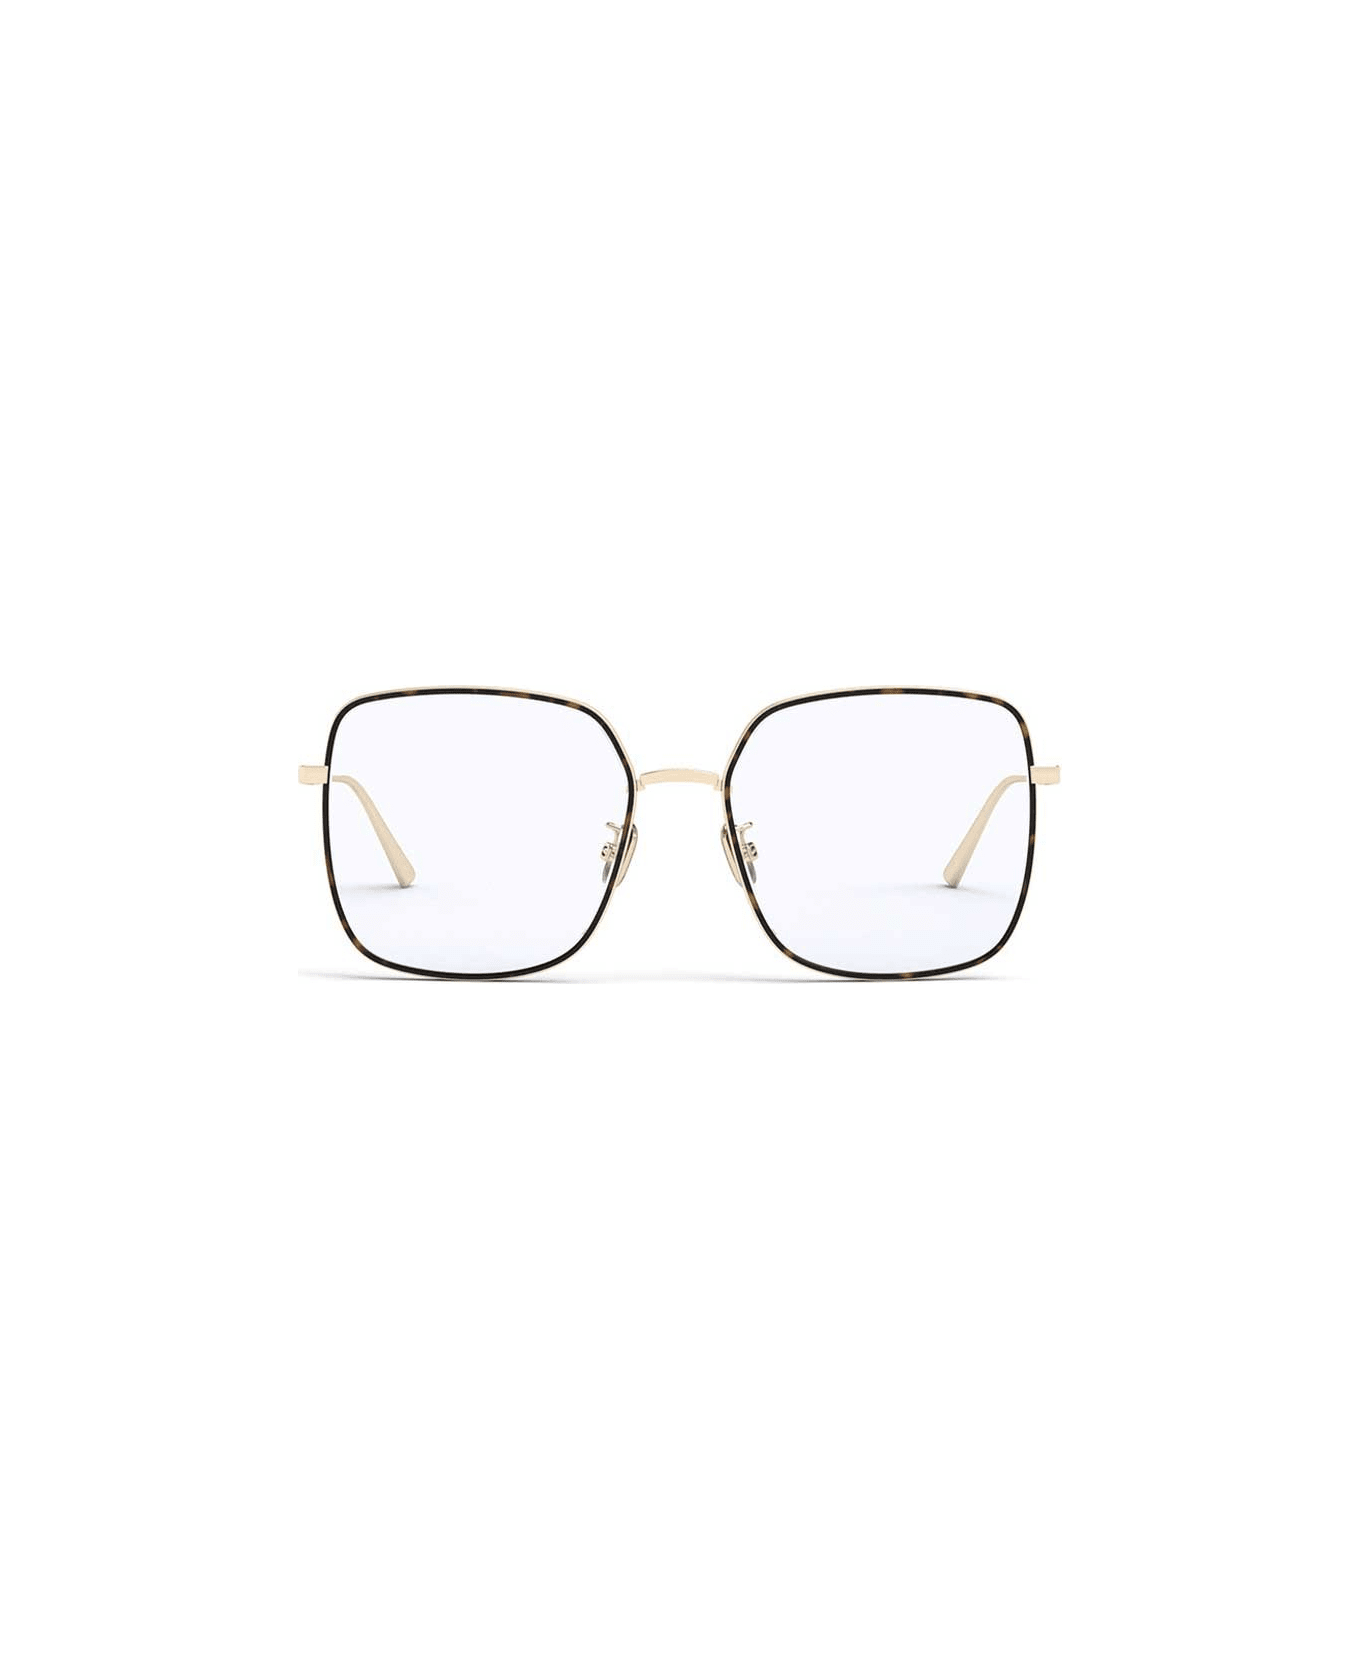 Dior Eyewear Glasses - Oro